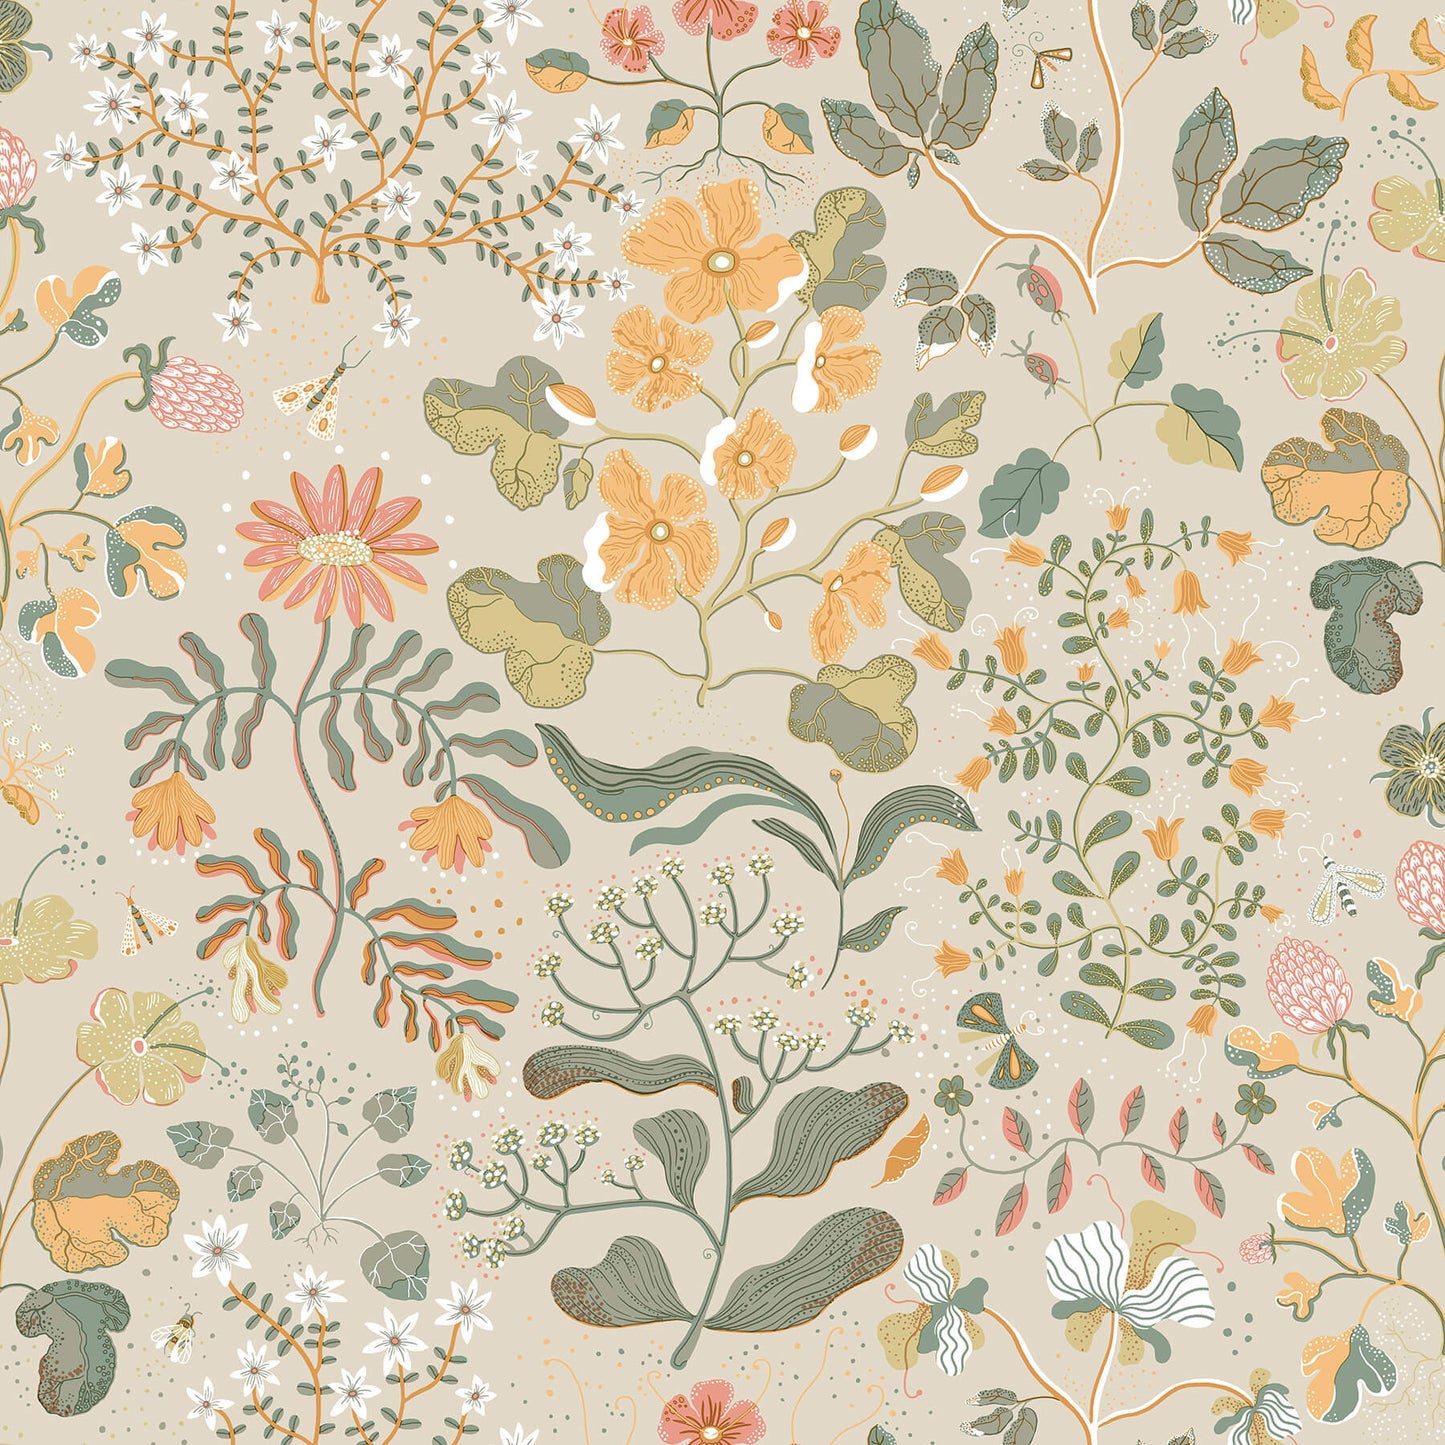 A-Street Prints Botanica Groh Floral Wallpaper - Apricot